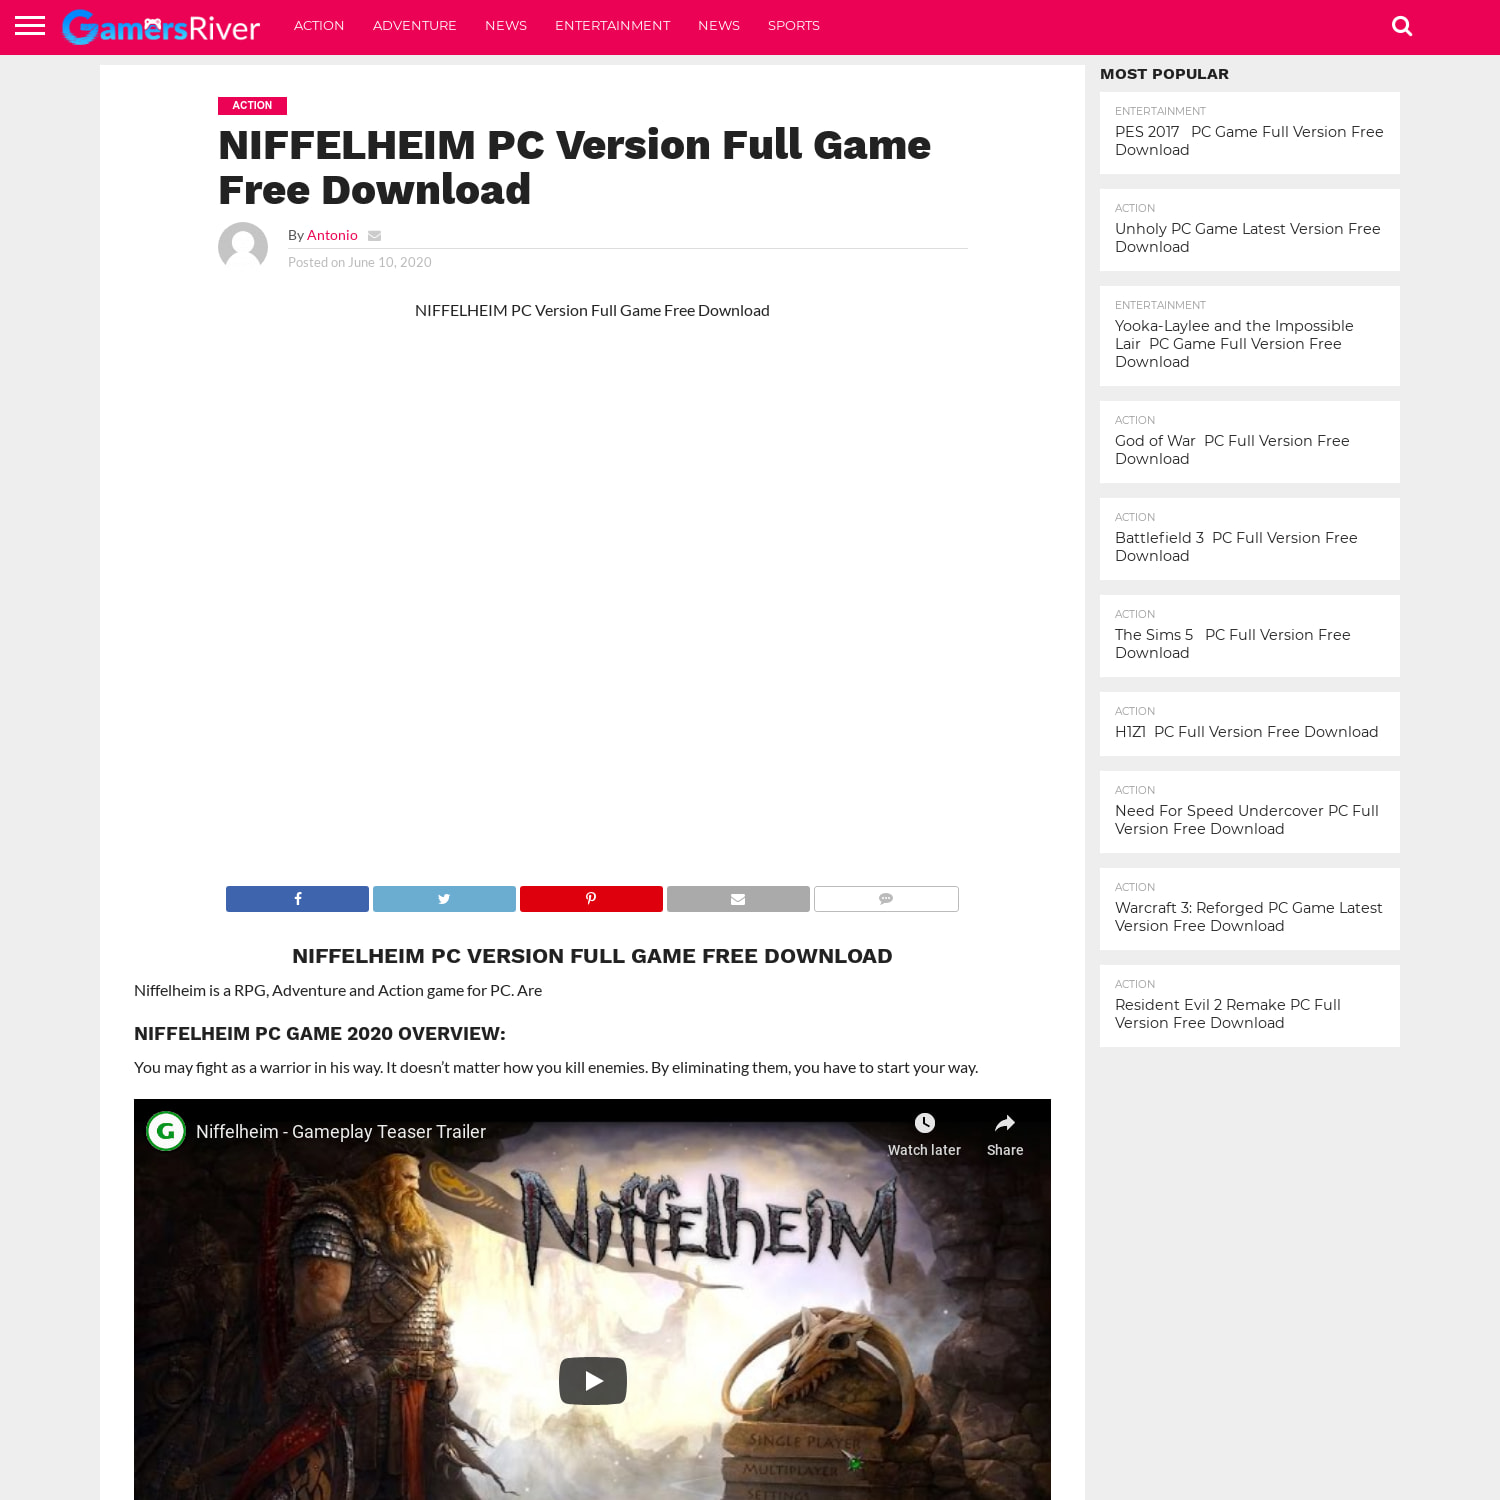 NIFFELHEIM PC Version Full Game Free Download